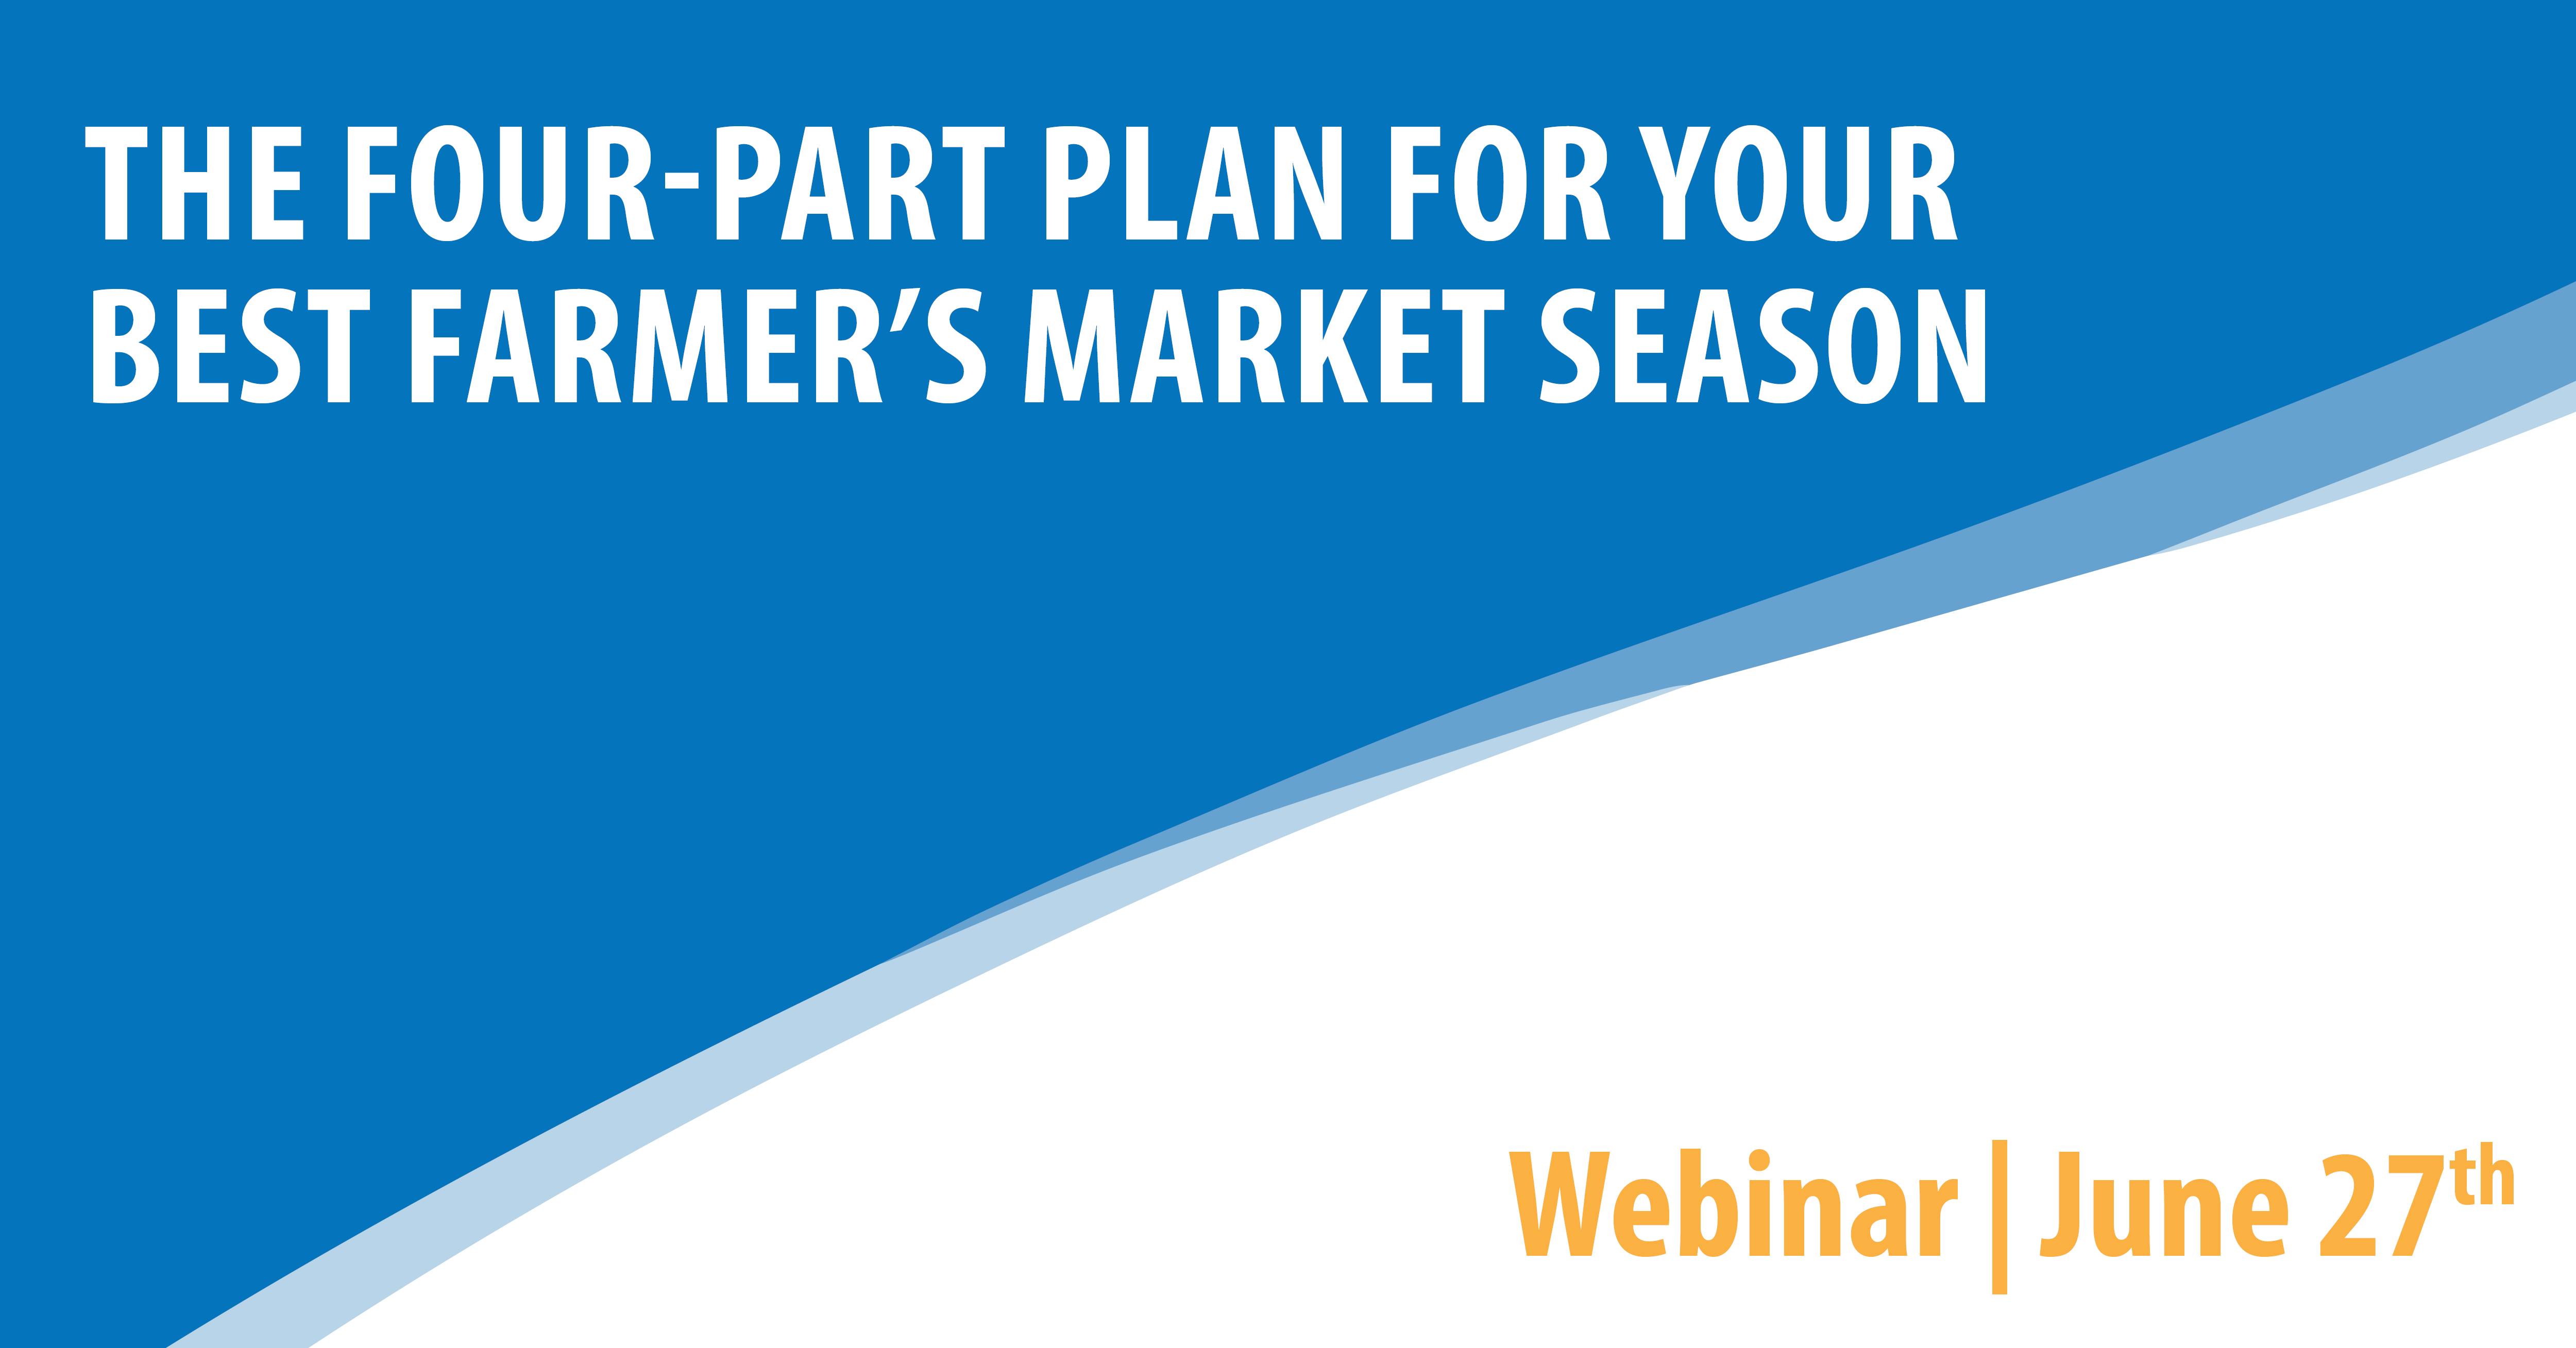 The Four-part Plan For Your Best Farmer's Market Season